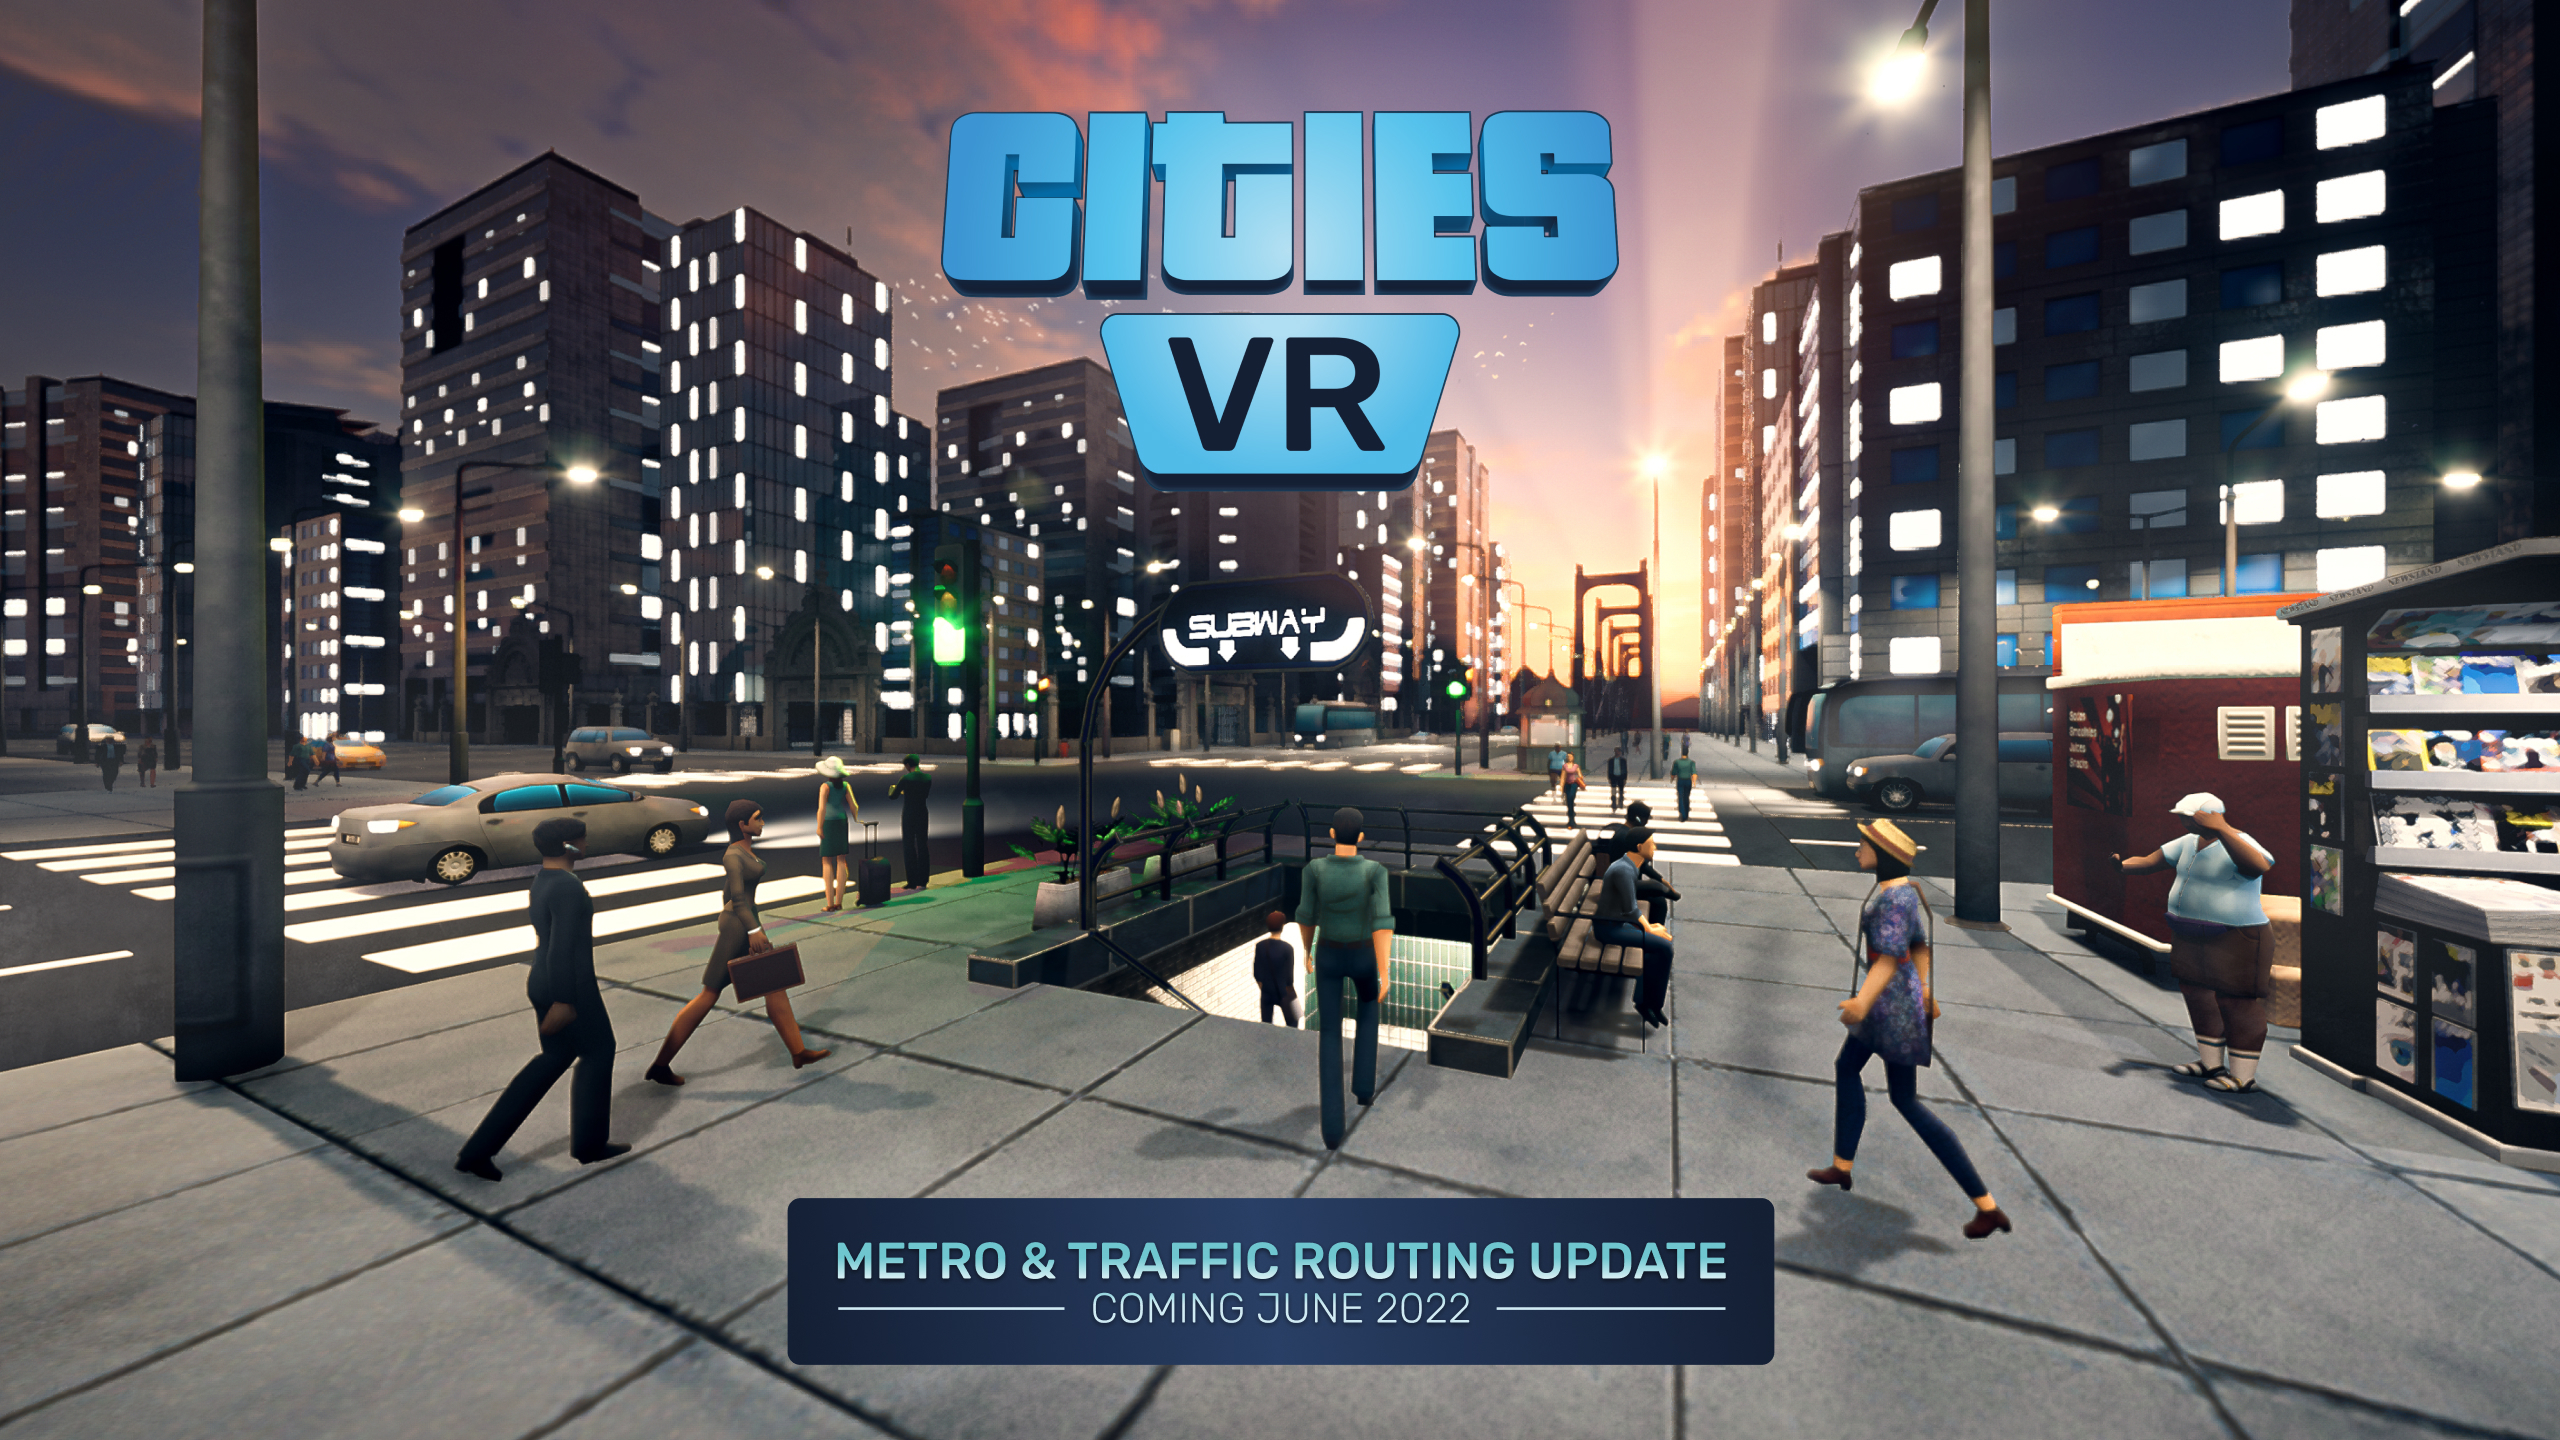 Cities: VR citizens venture into the metro